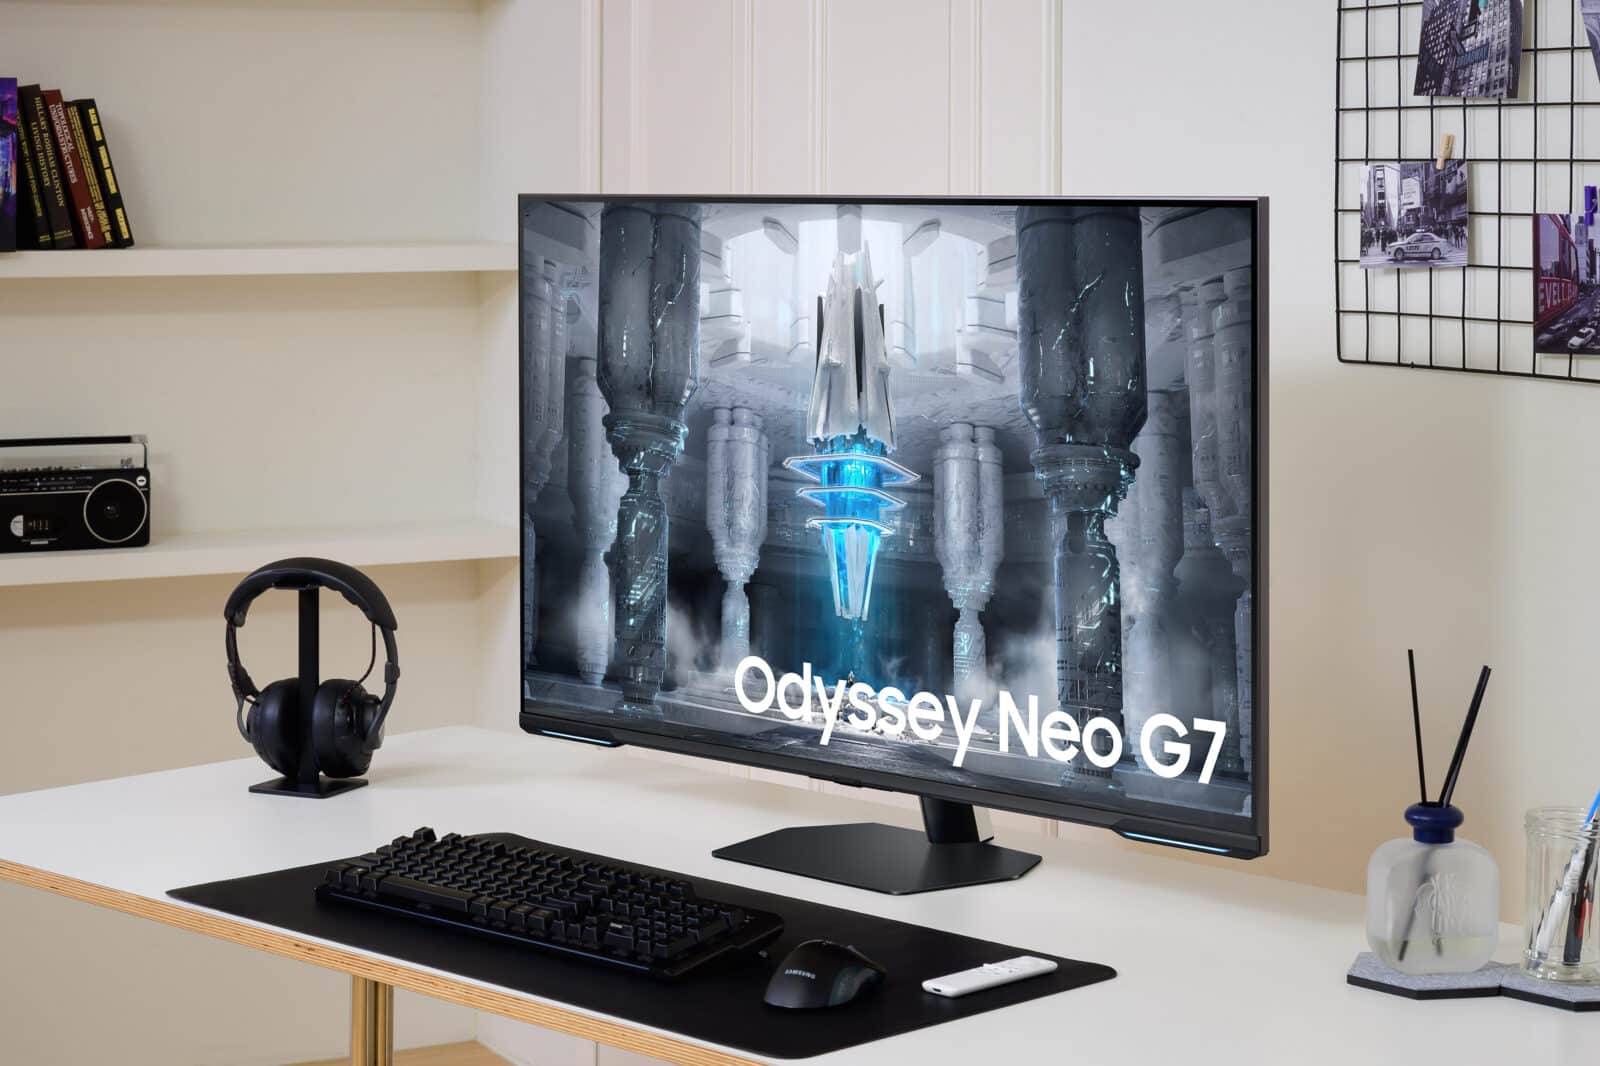 Odyssey Neo G7 dl2